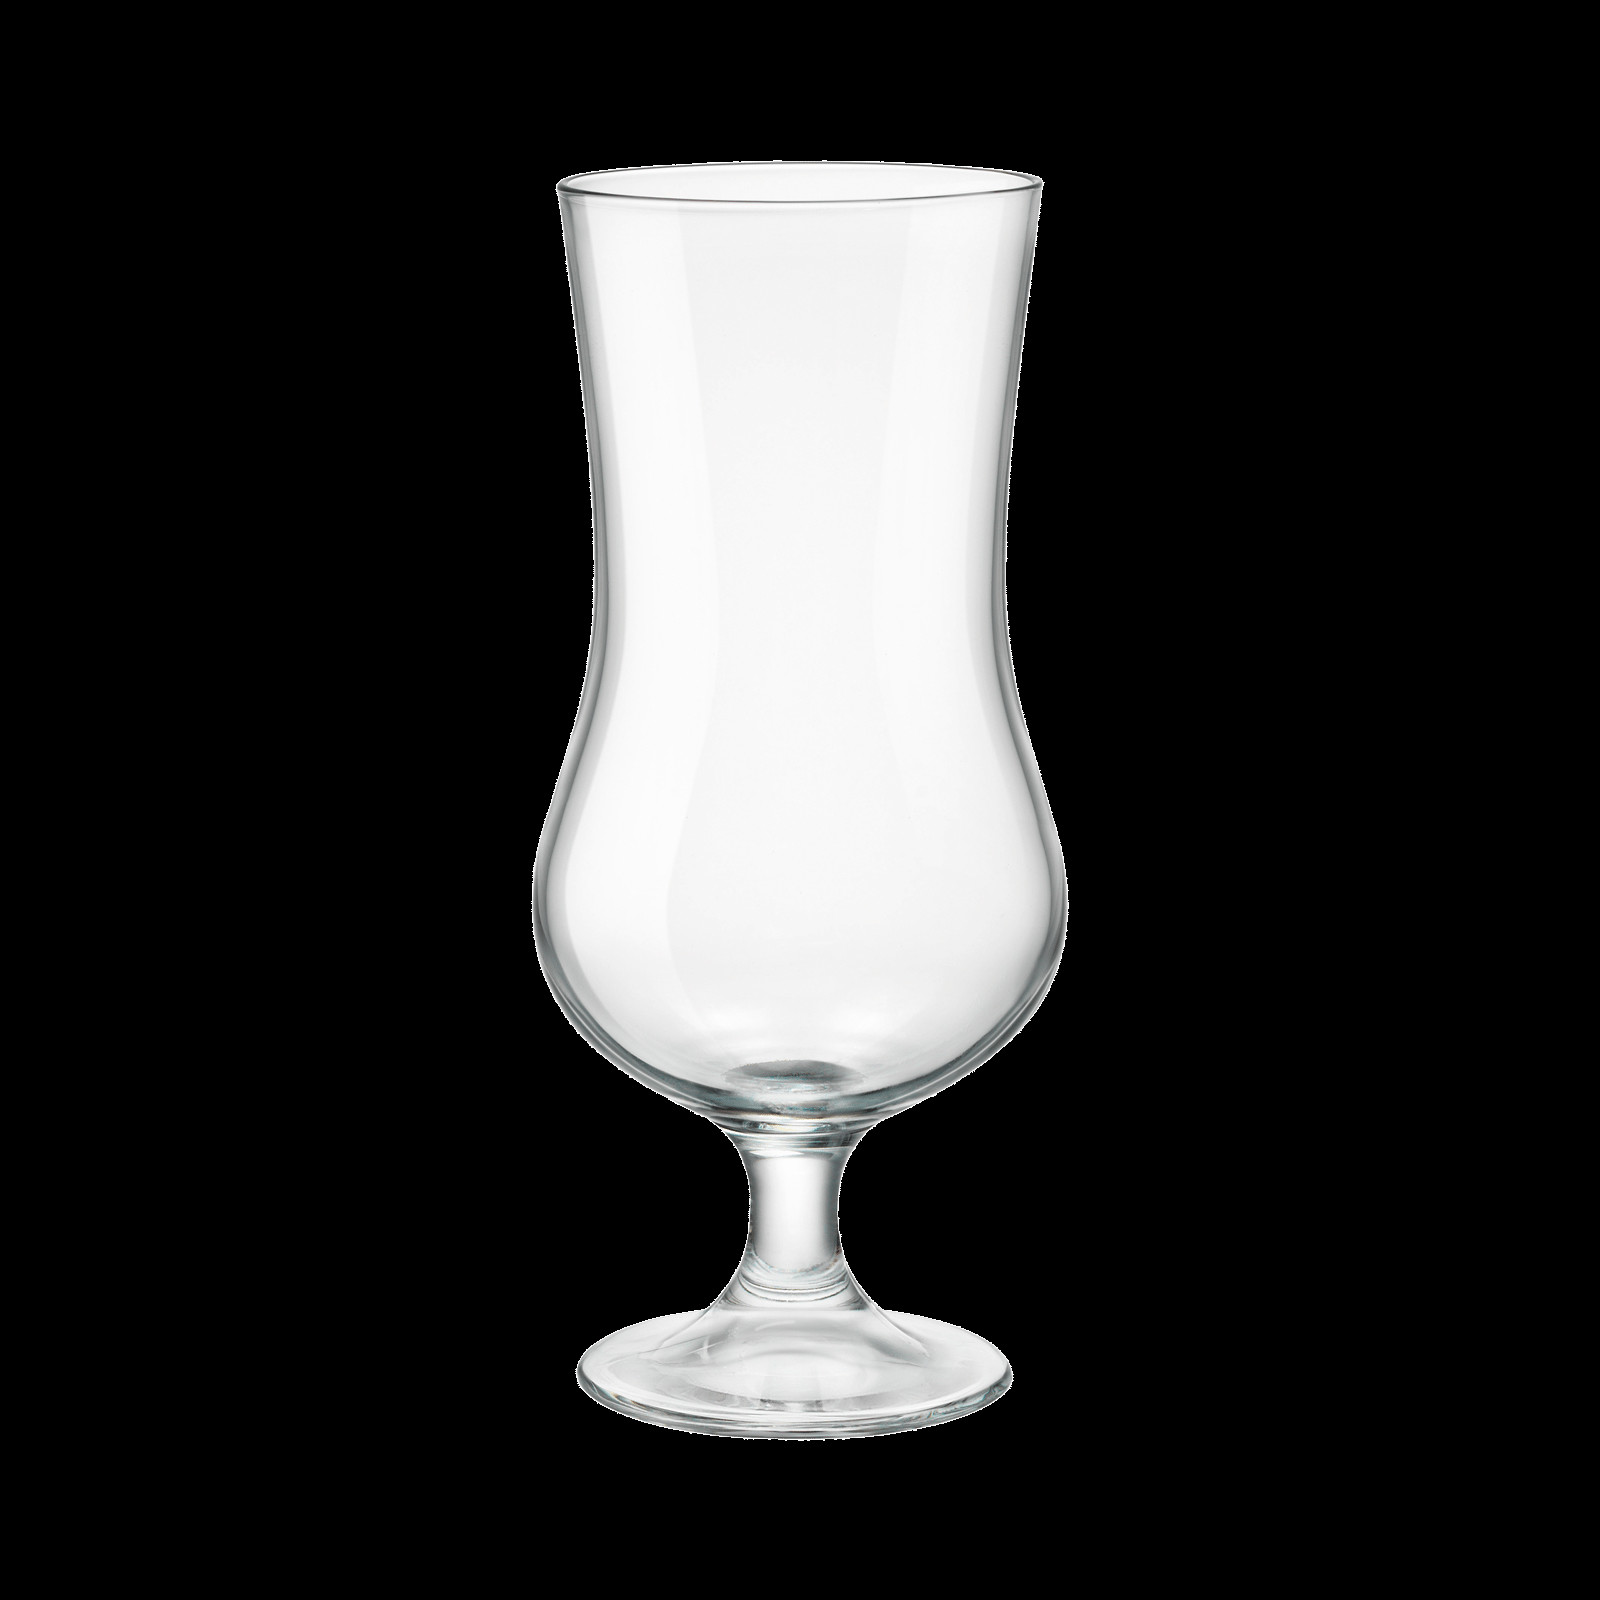 25 Elegant 3 Piece Glass Vase Set 2024 free download 3 piece glass vase set of archivi products bormioli rocco regarding large beer glass